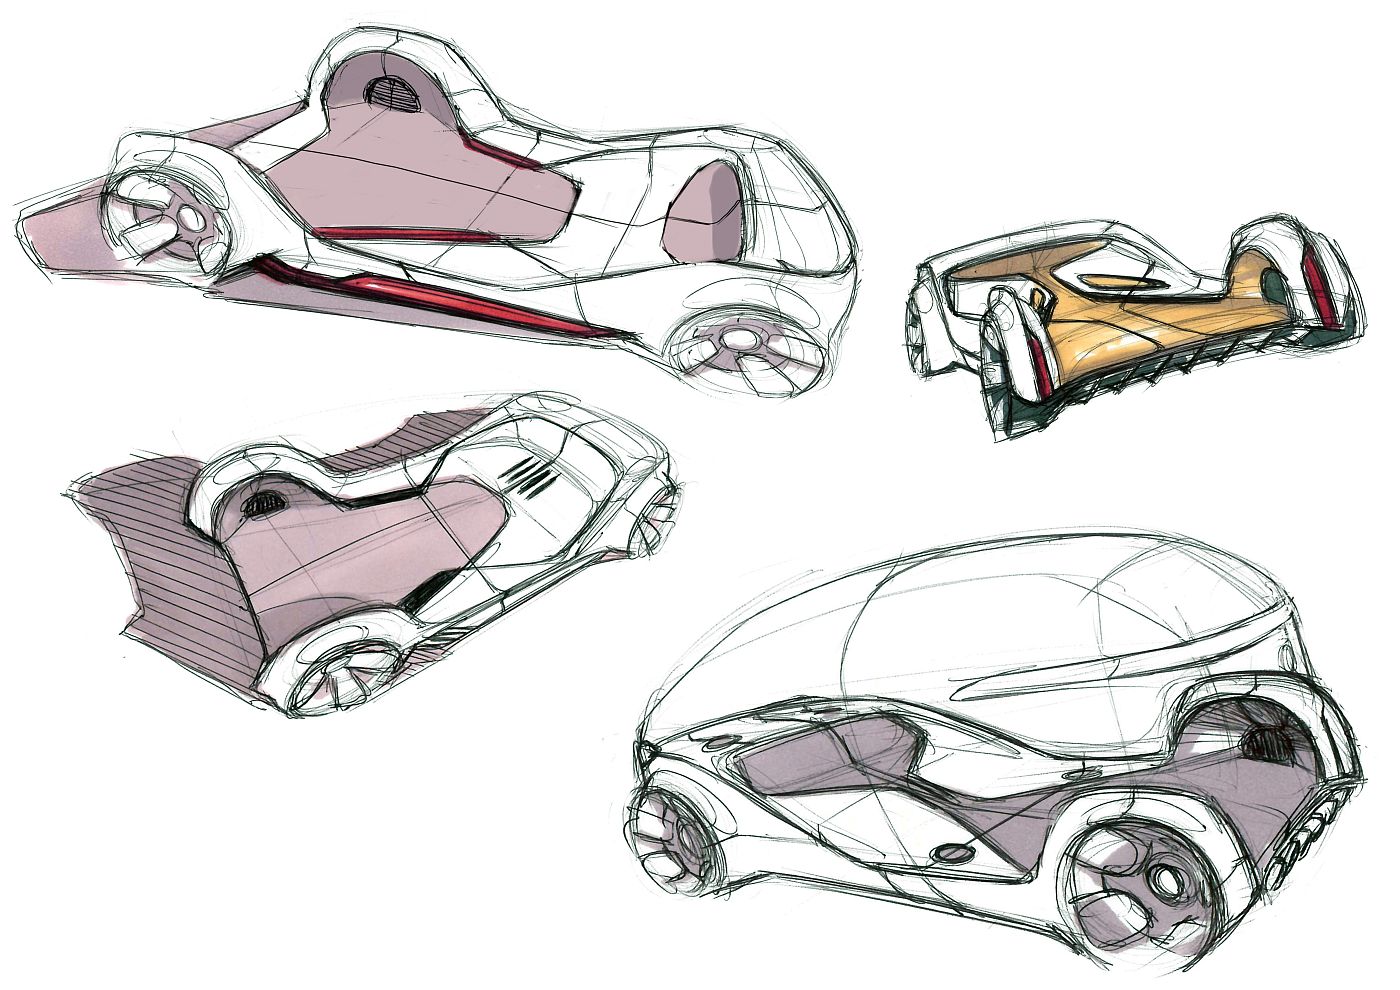 Mercedes-Benz Vans Vision URBANETIC Designskizze

Mercedes-Benz Vans Vision URBANETIC Design Sketch